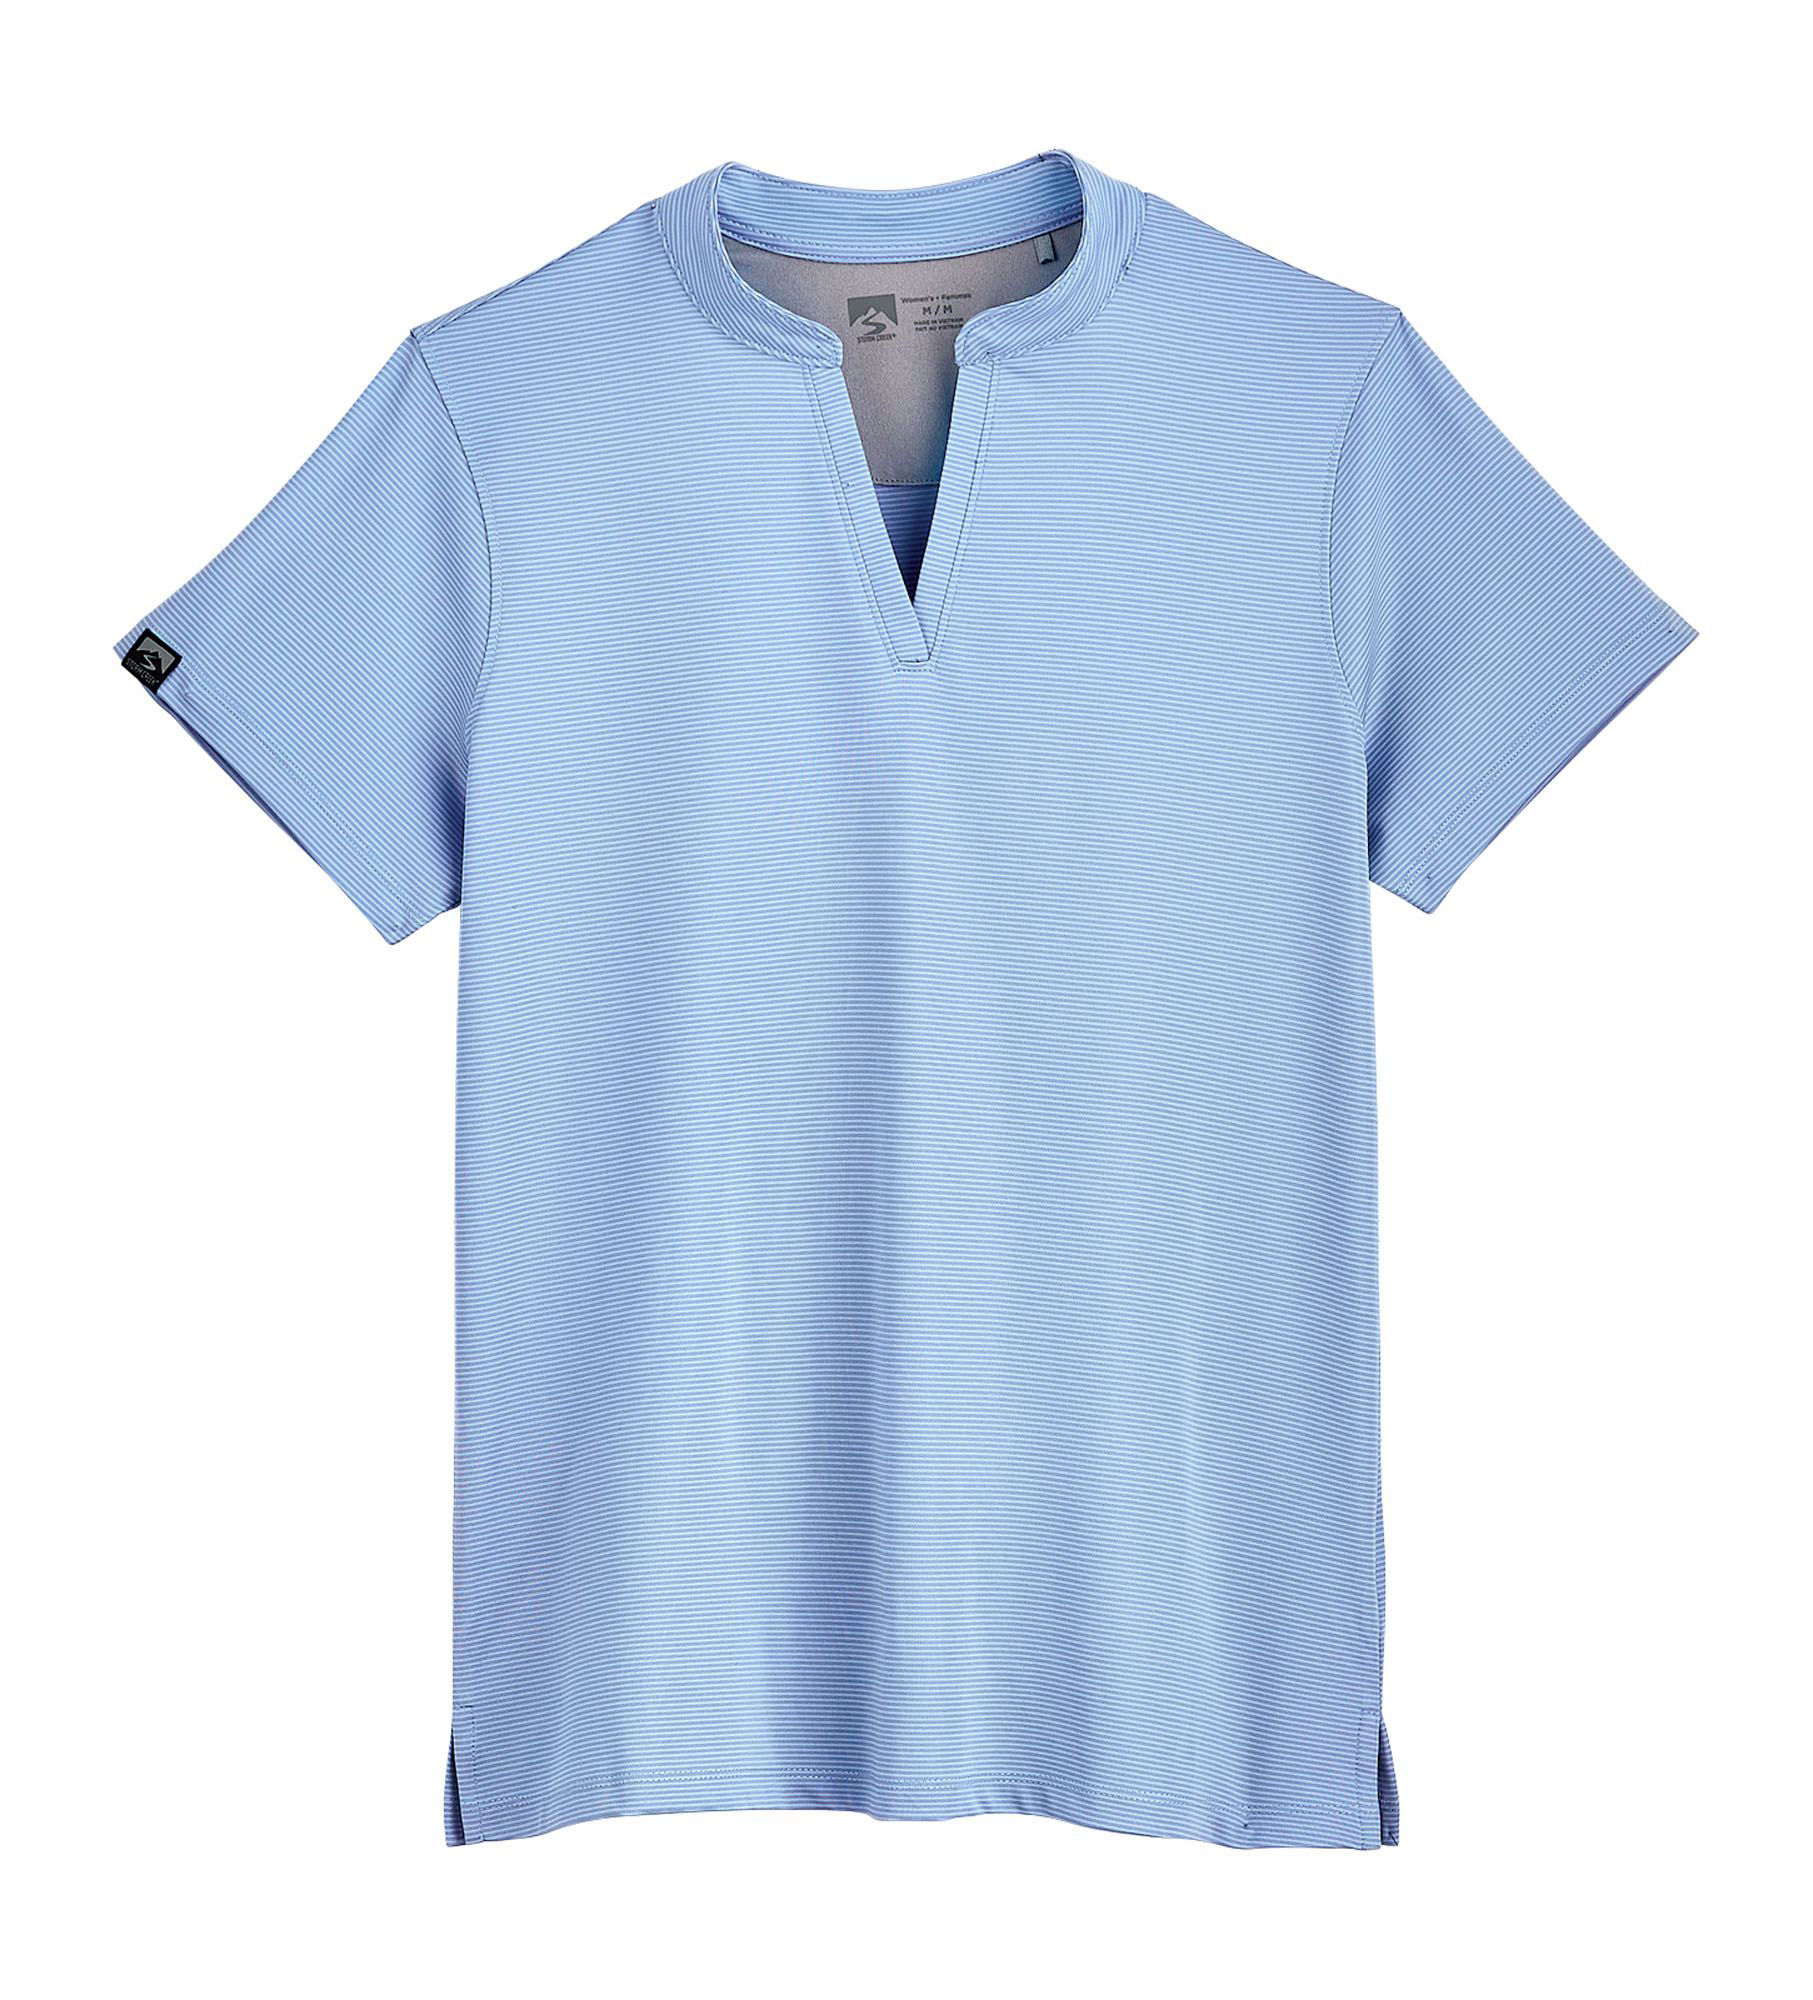 Storm Creek Optimist Short-Sleeve Polo Shirt for Ladies - Peri Blue - L